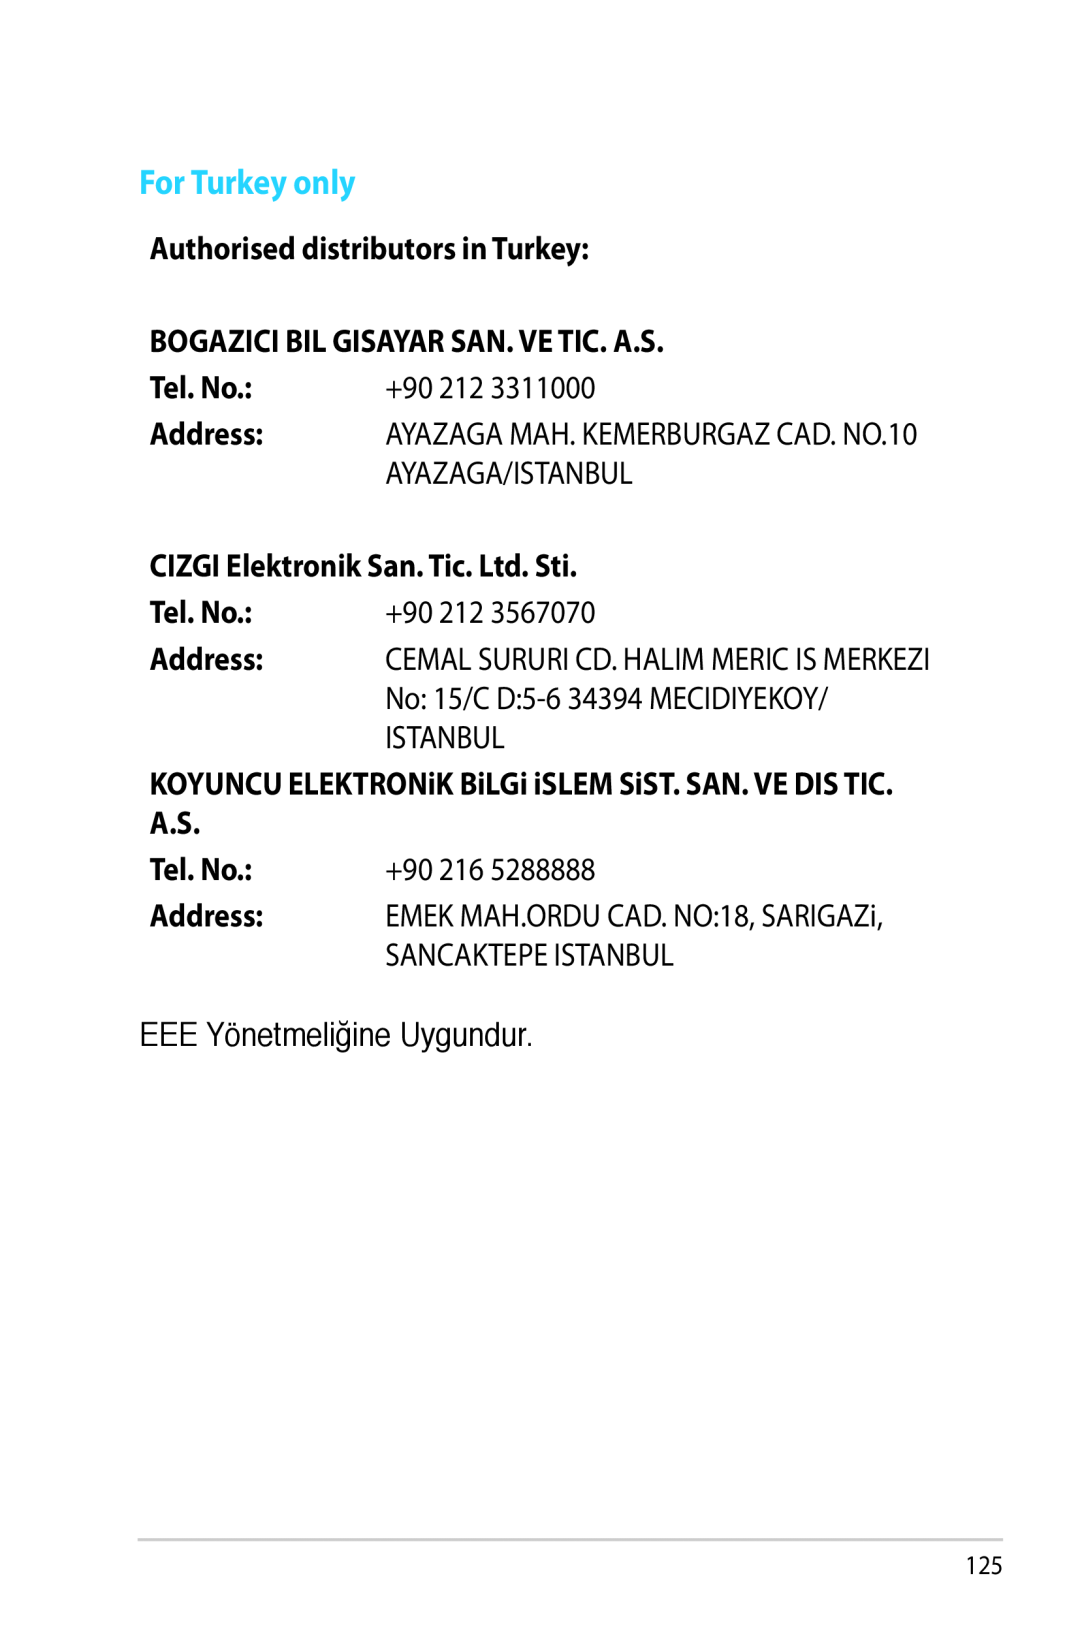 Asus RTAC68U For Turkey only, Authorised distributors in Turkey, BOGAZICI BIL GISAYAR SAN. VE TIC. A.S Tel. No Address 